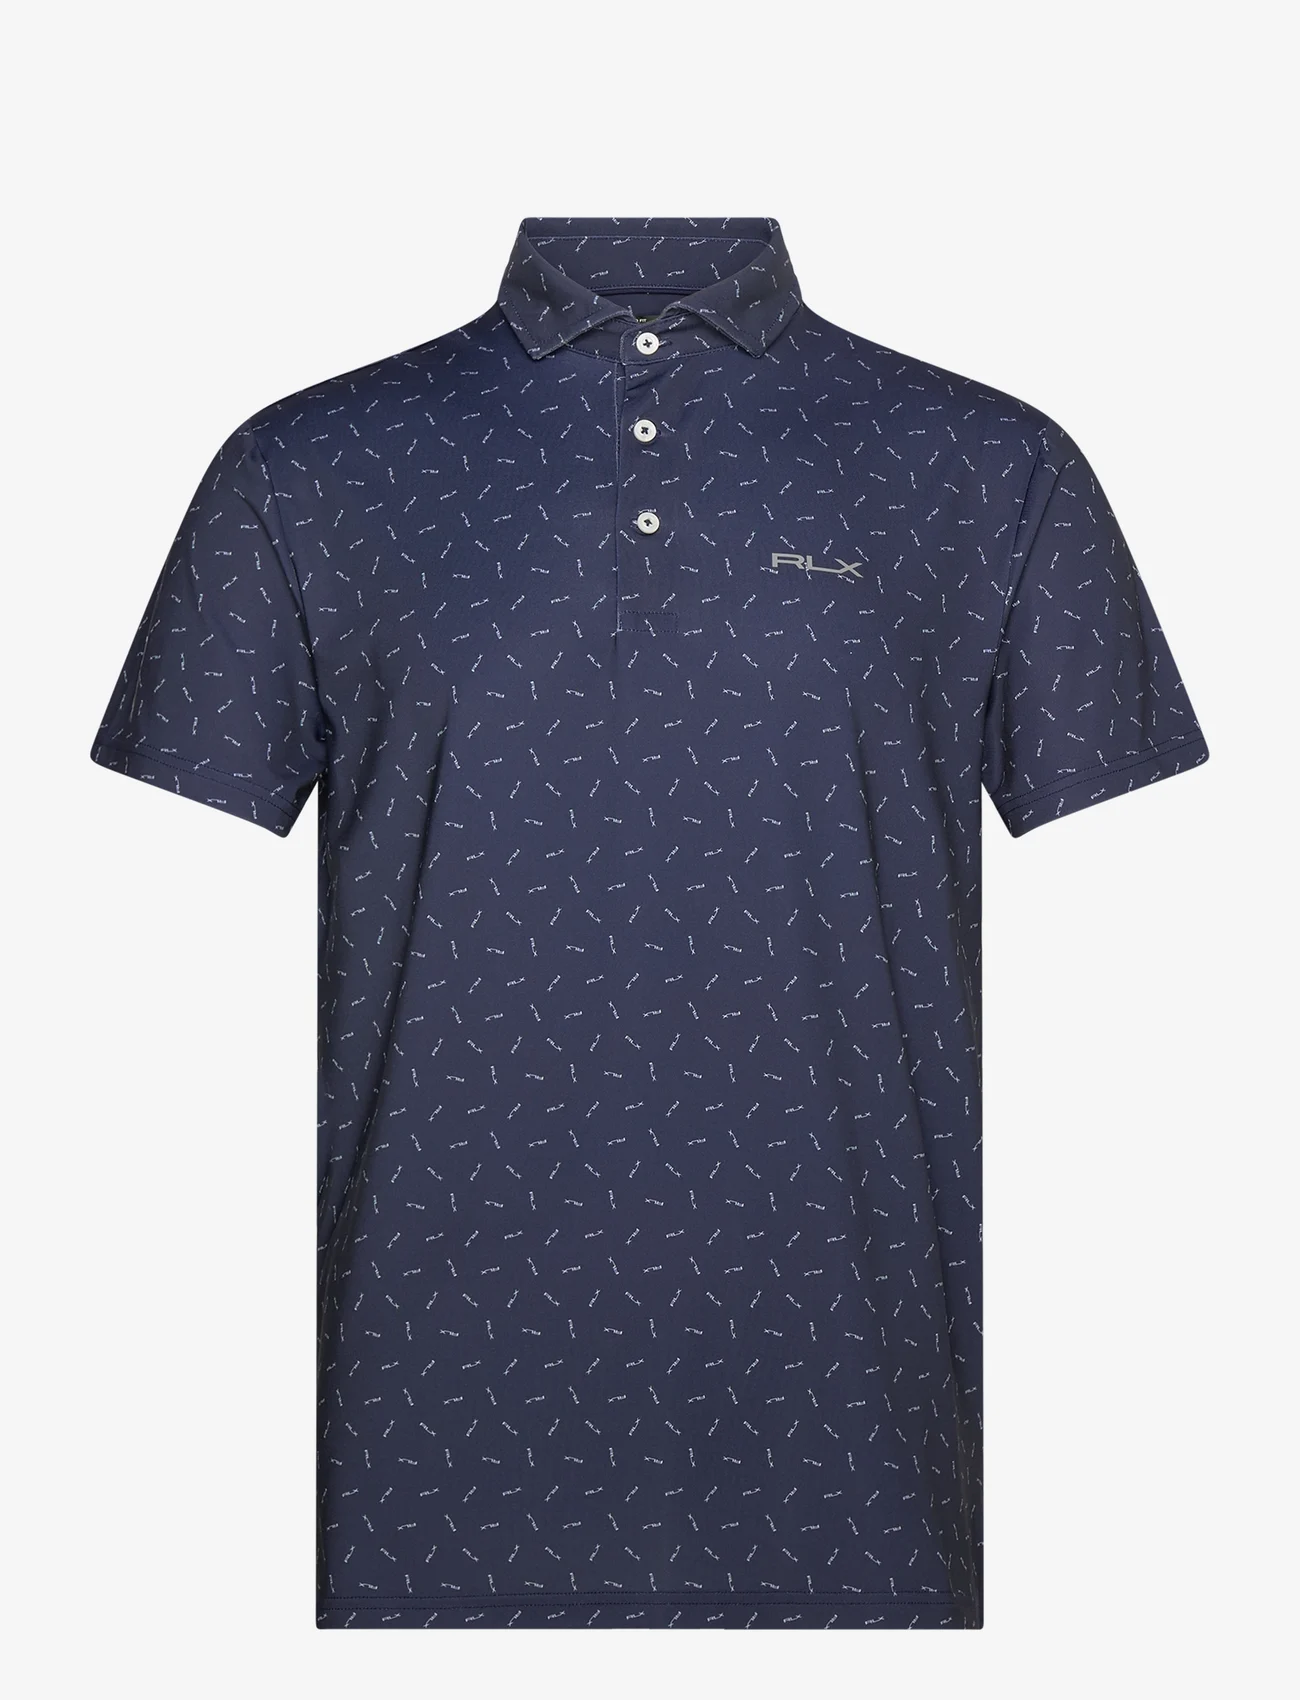 Ralph Lauren Golf - Tailored Fit Performance Polo Shirt - polo marškinėliai trumpomis rankovėmis - refined navy micr - 0